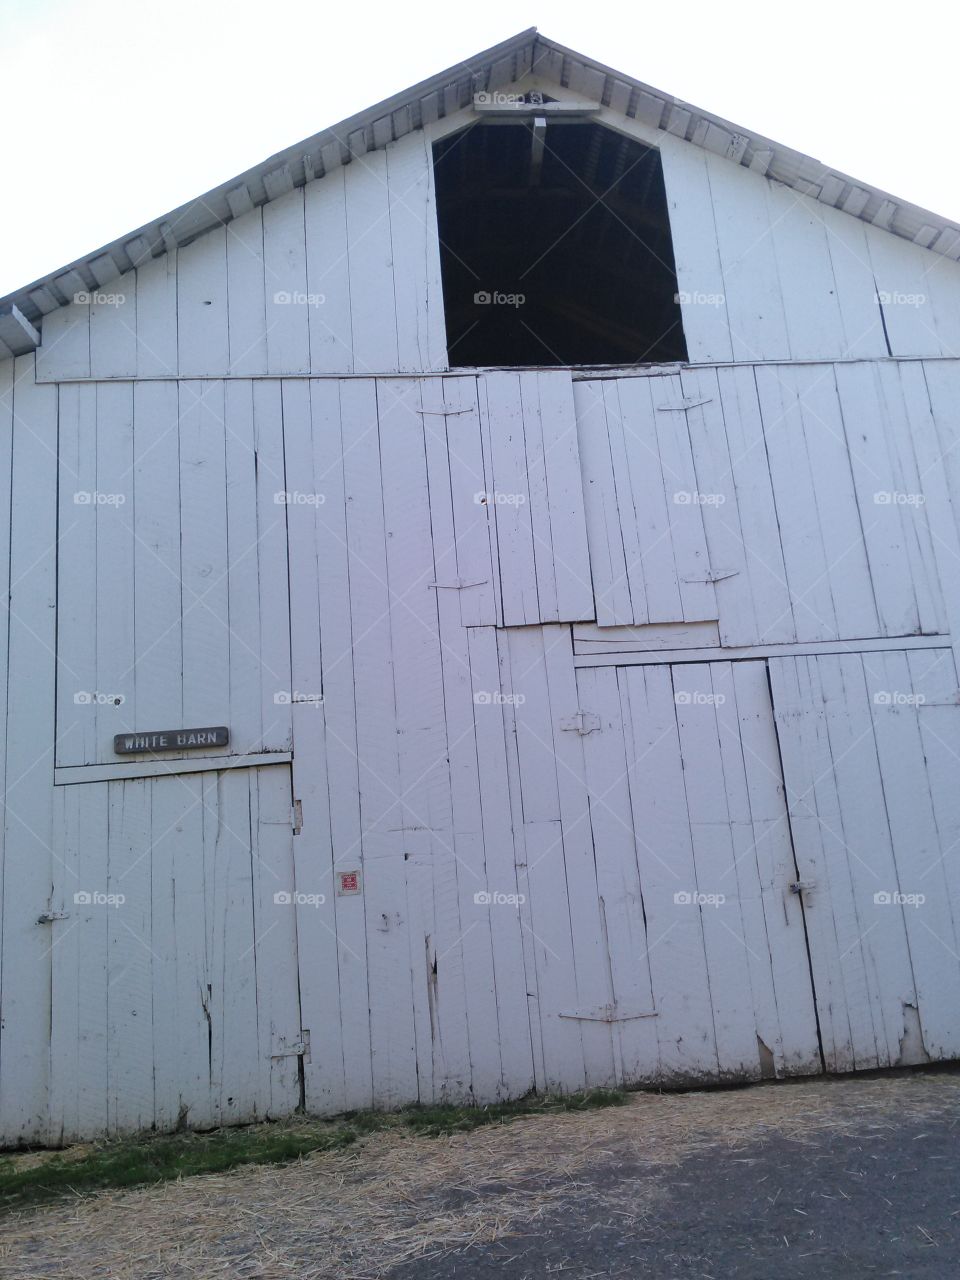 The white barn